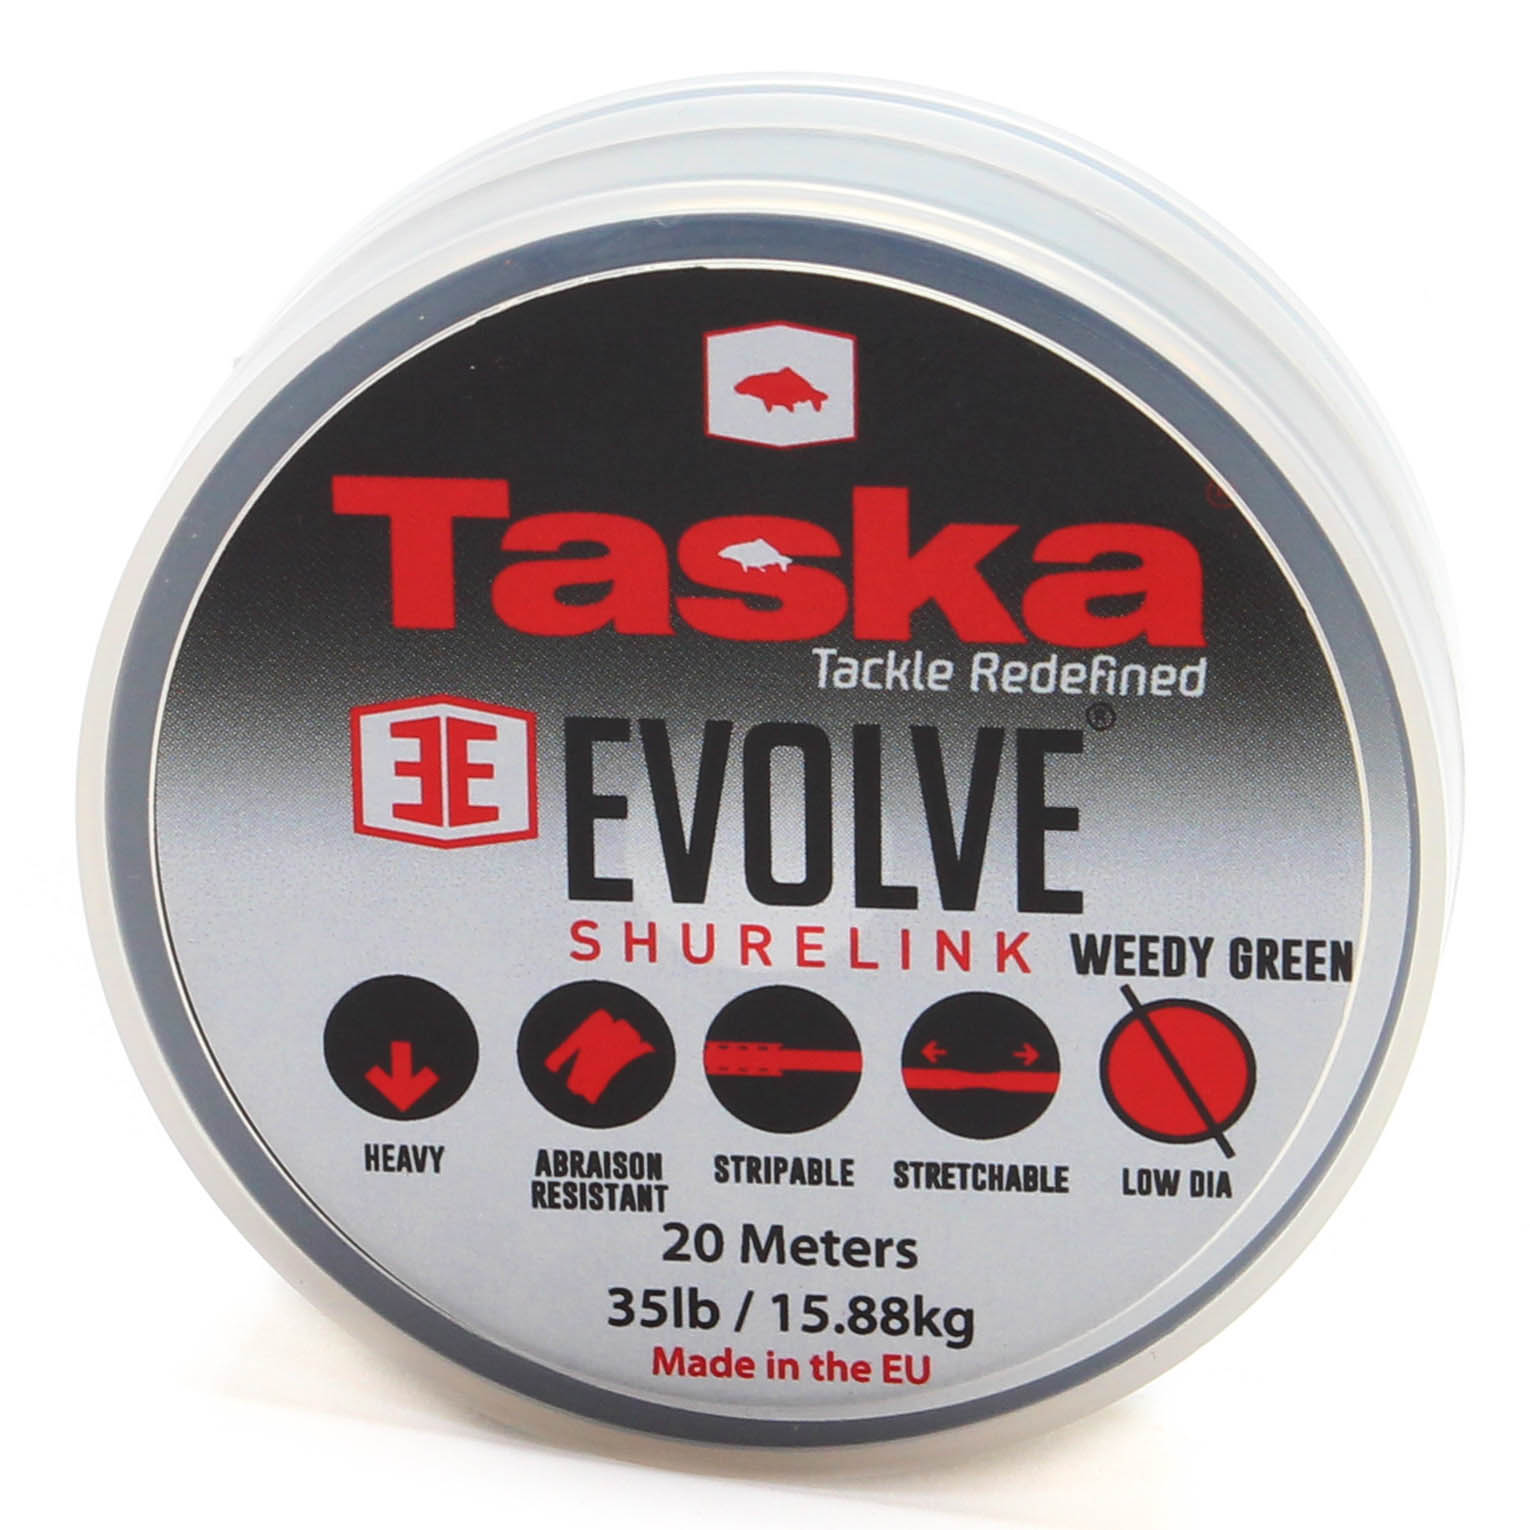 Taska Evolve - Shurelink komb. návazcový materiál hnědý 20m 35lb